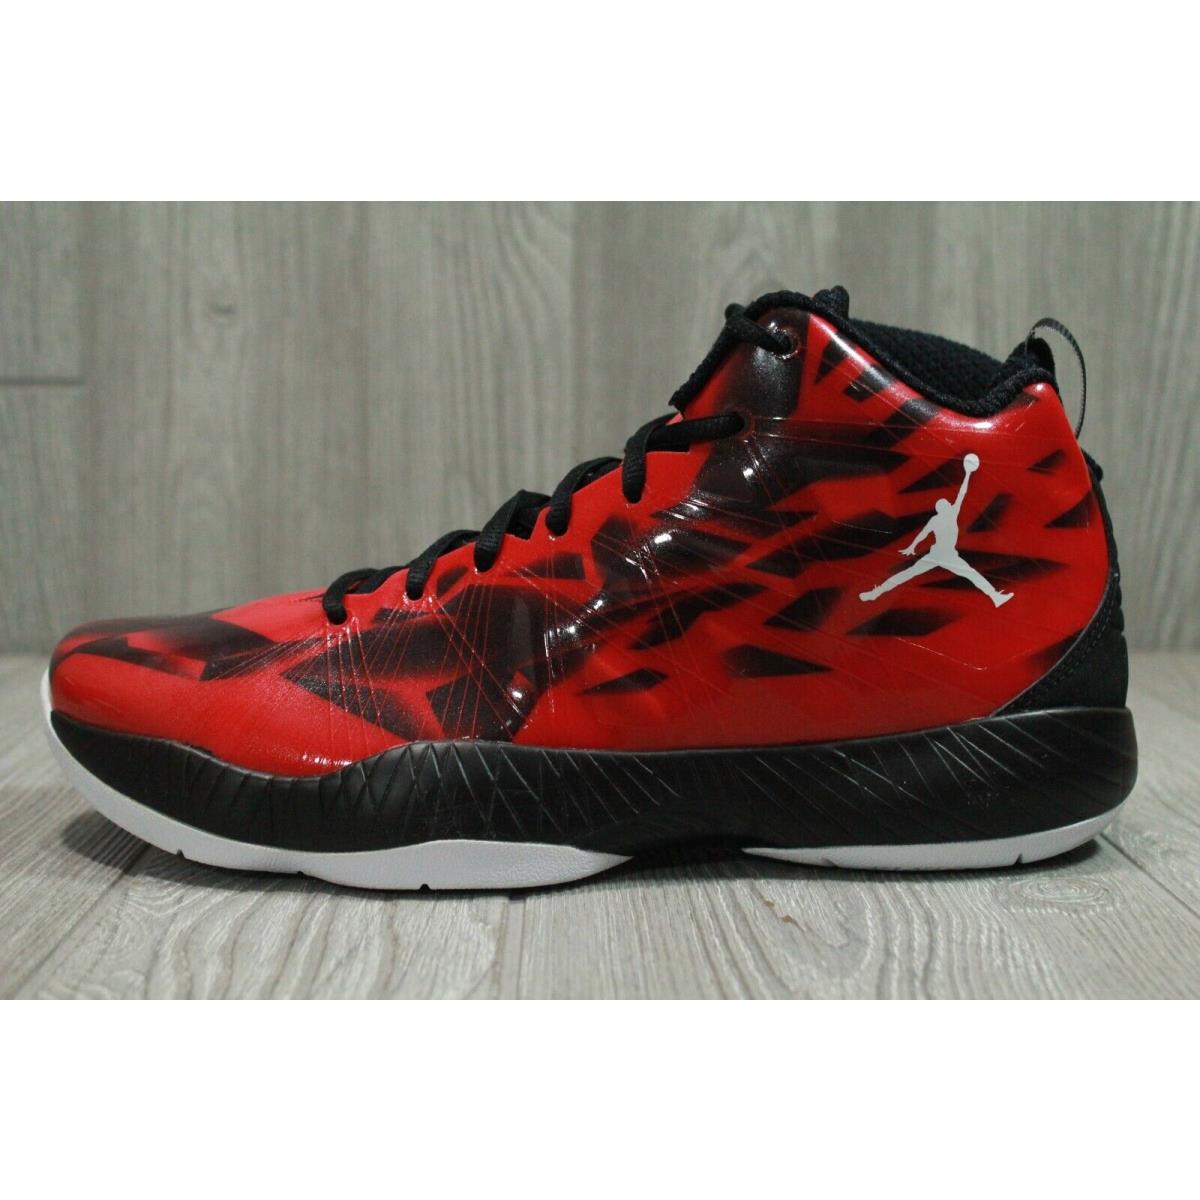 Nike Air Jordan Lite Red Black EV 2012 Shoes Mens Size 10.5 11 13 Oss